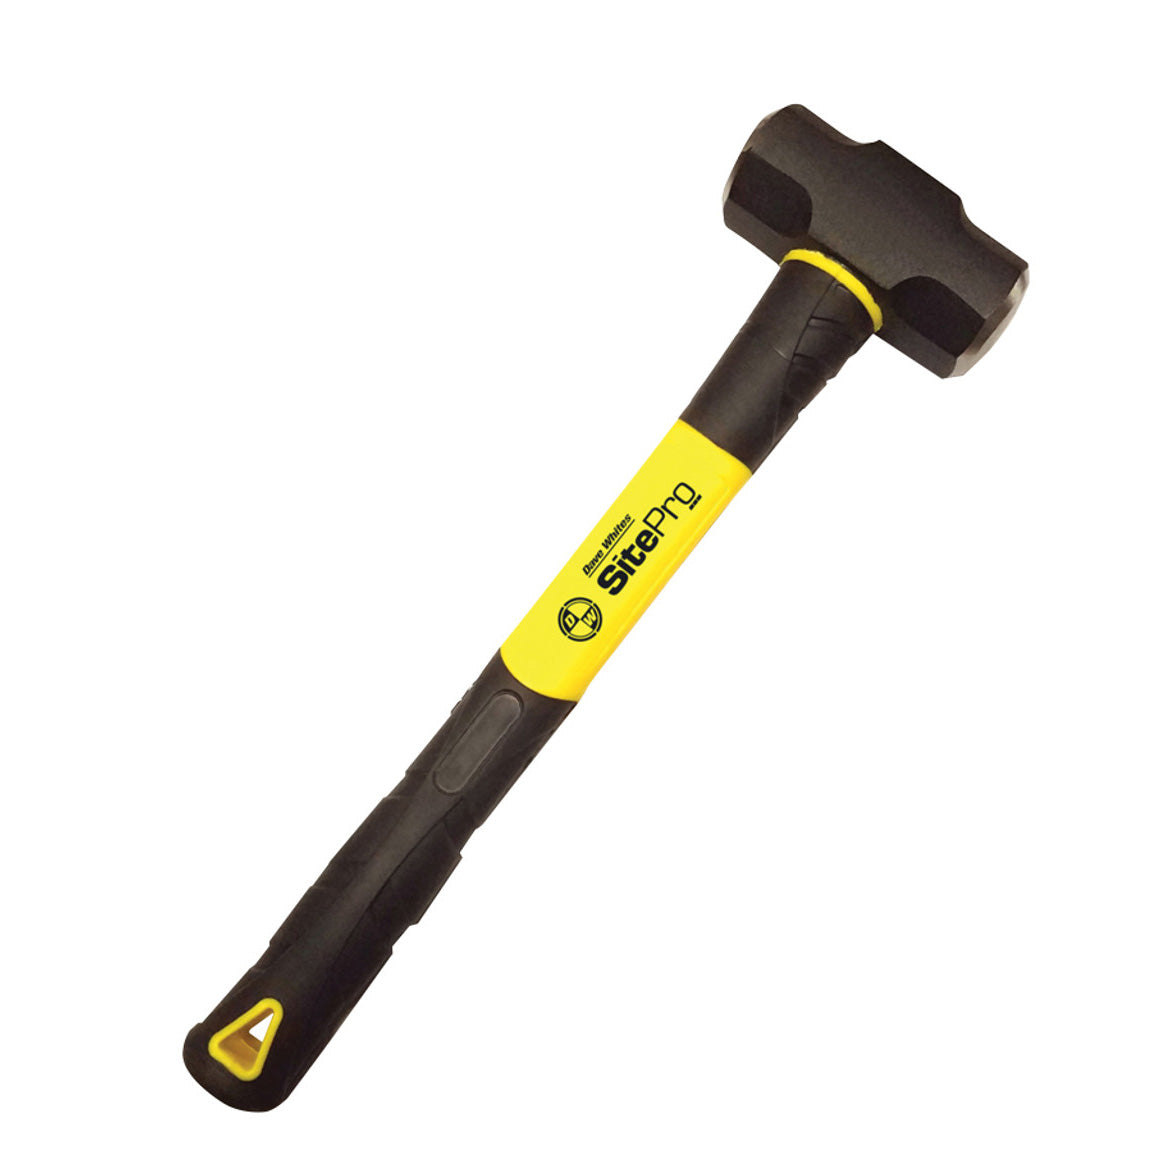 SitePro 48oz Engineer Hammer with Fiberglass Handle Part Number: 17-RF48E